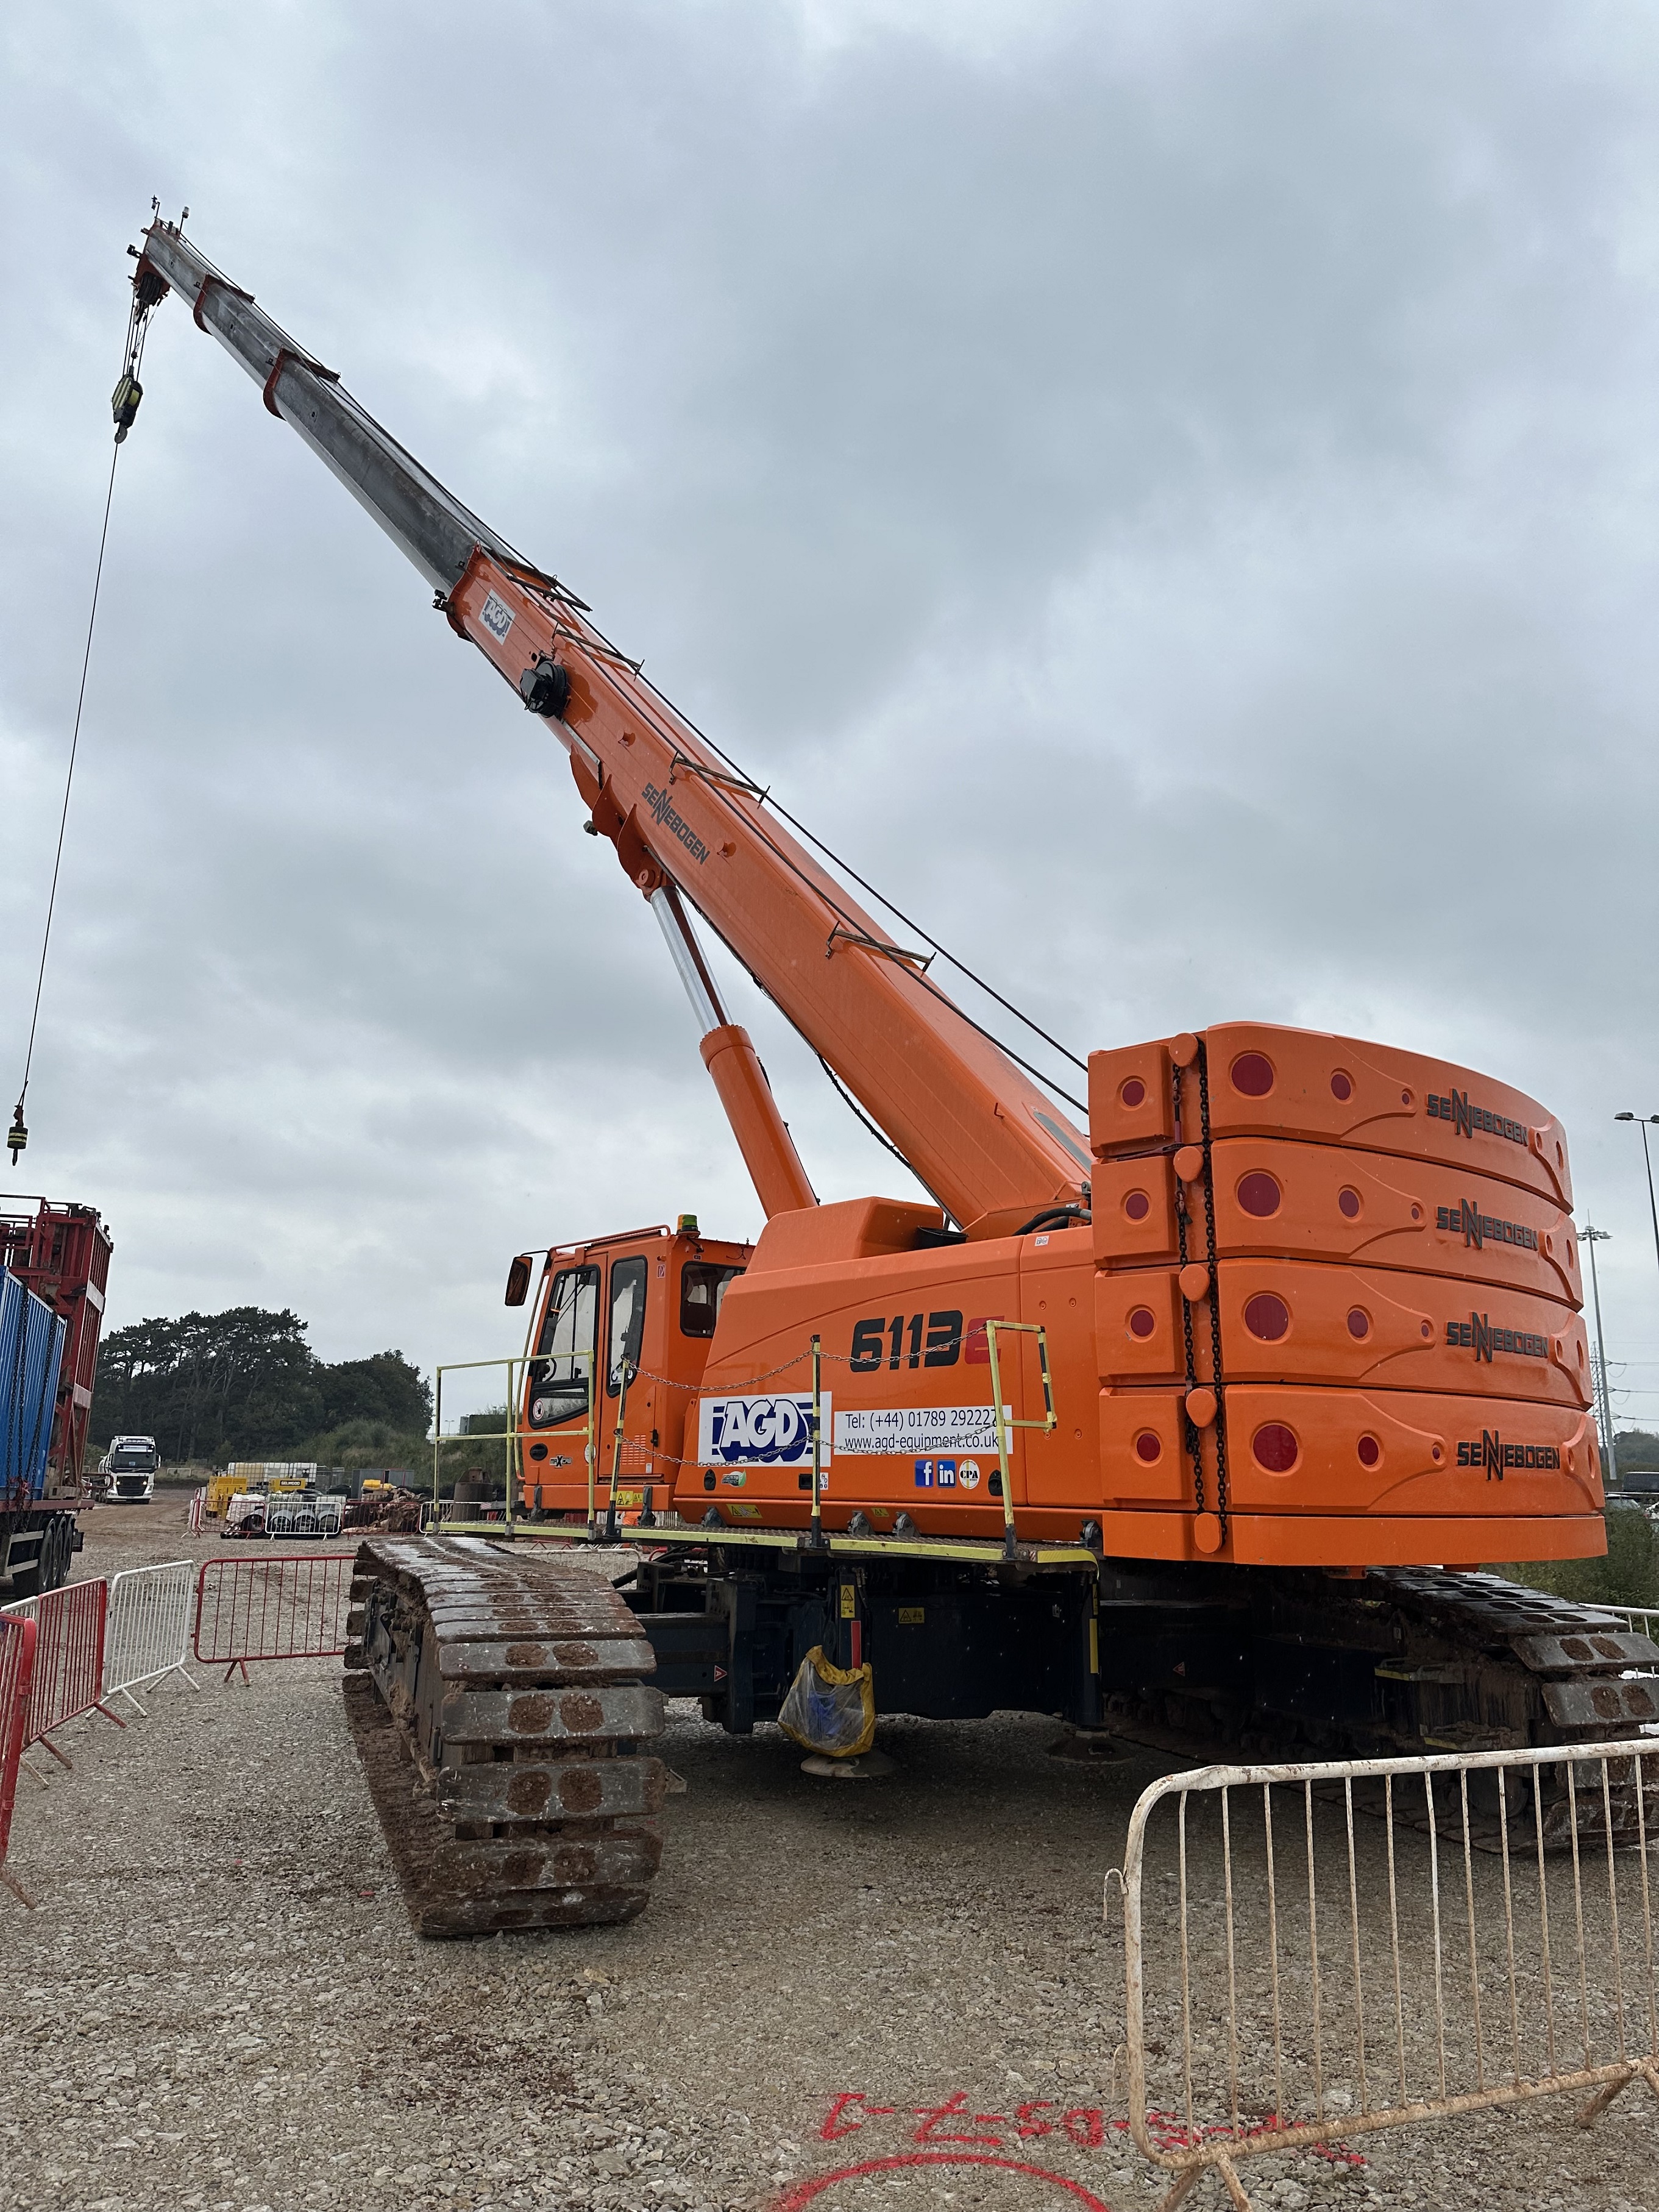 Suppliers of UK Hydraulic Crawler Crane Hire Pioneers